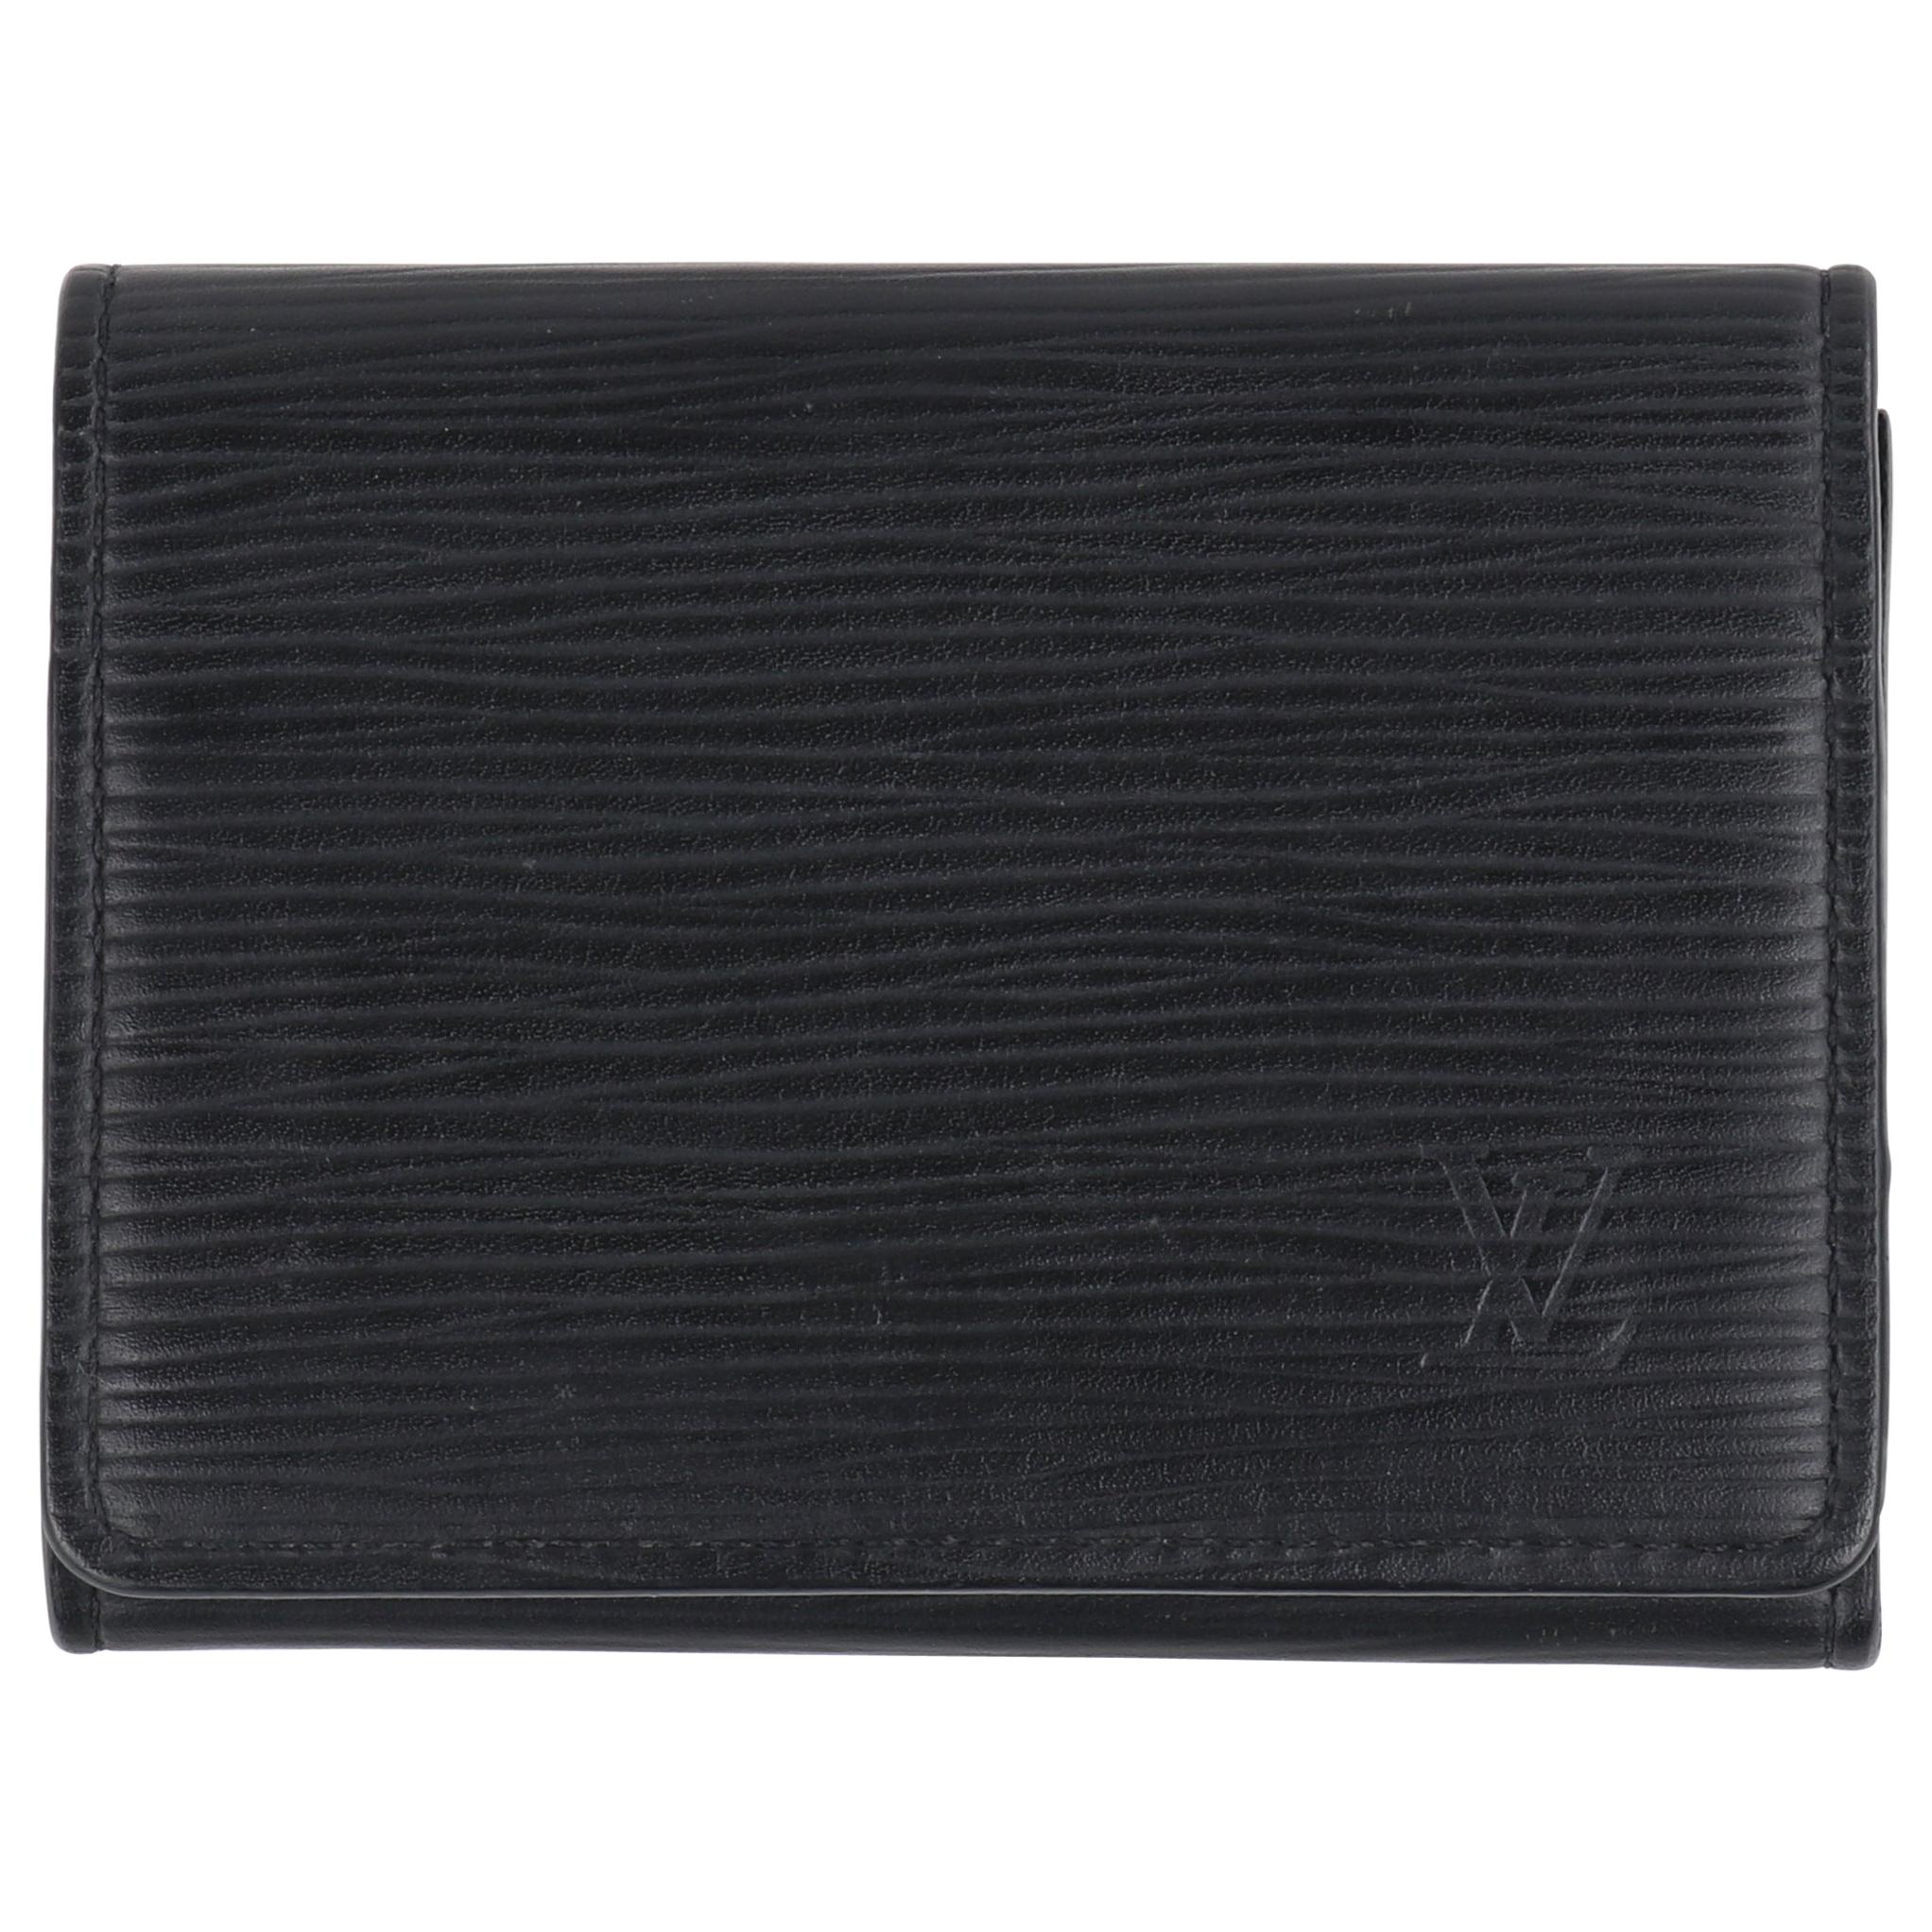 LOUIS VUITTON c.2017 Black Epi Leather Envelope Business Card Holder Snap Wallet